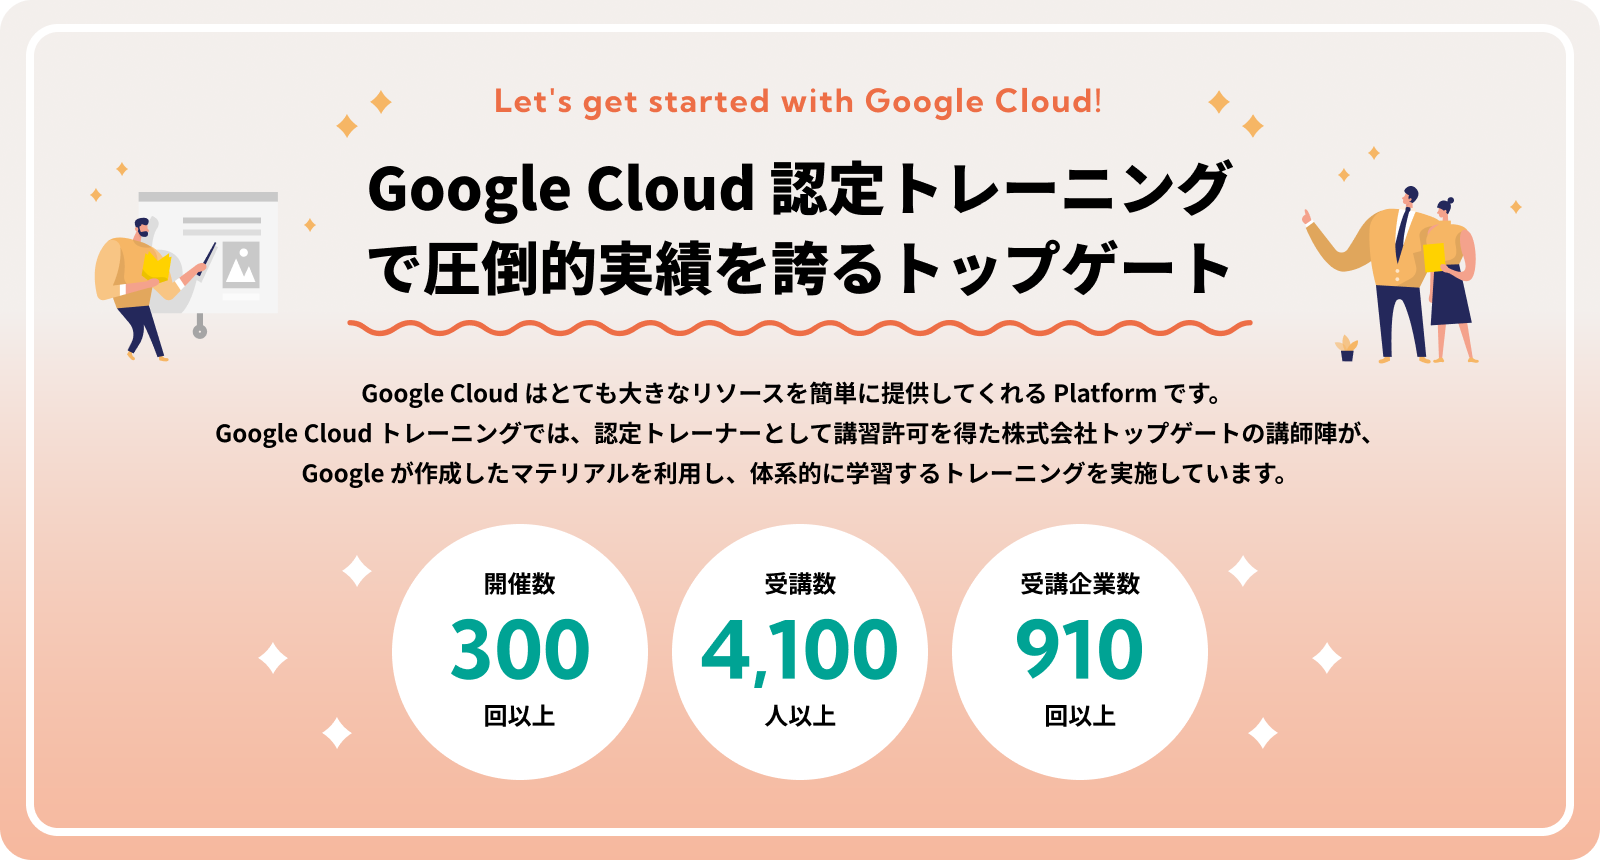 Google Cloud 認定トレーニングで圧倒的実績を誇るトップゲート